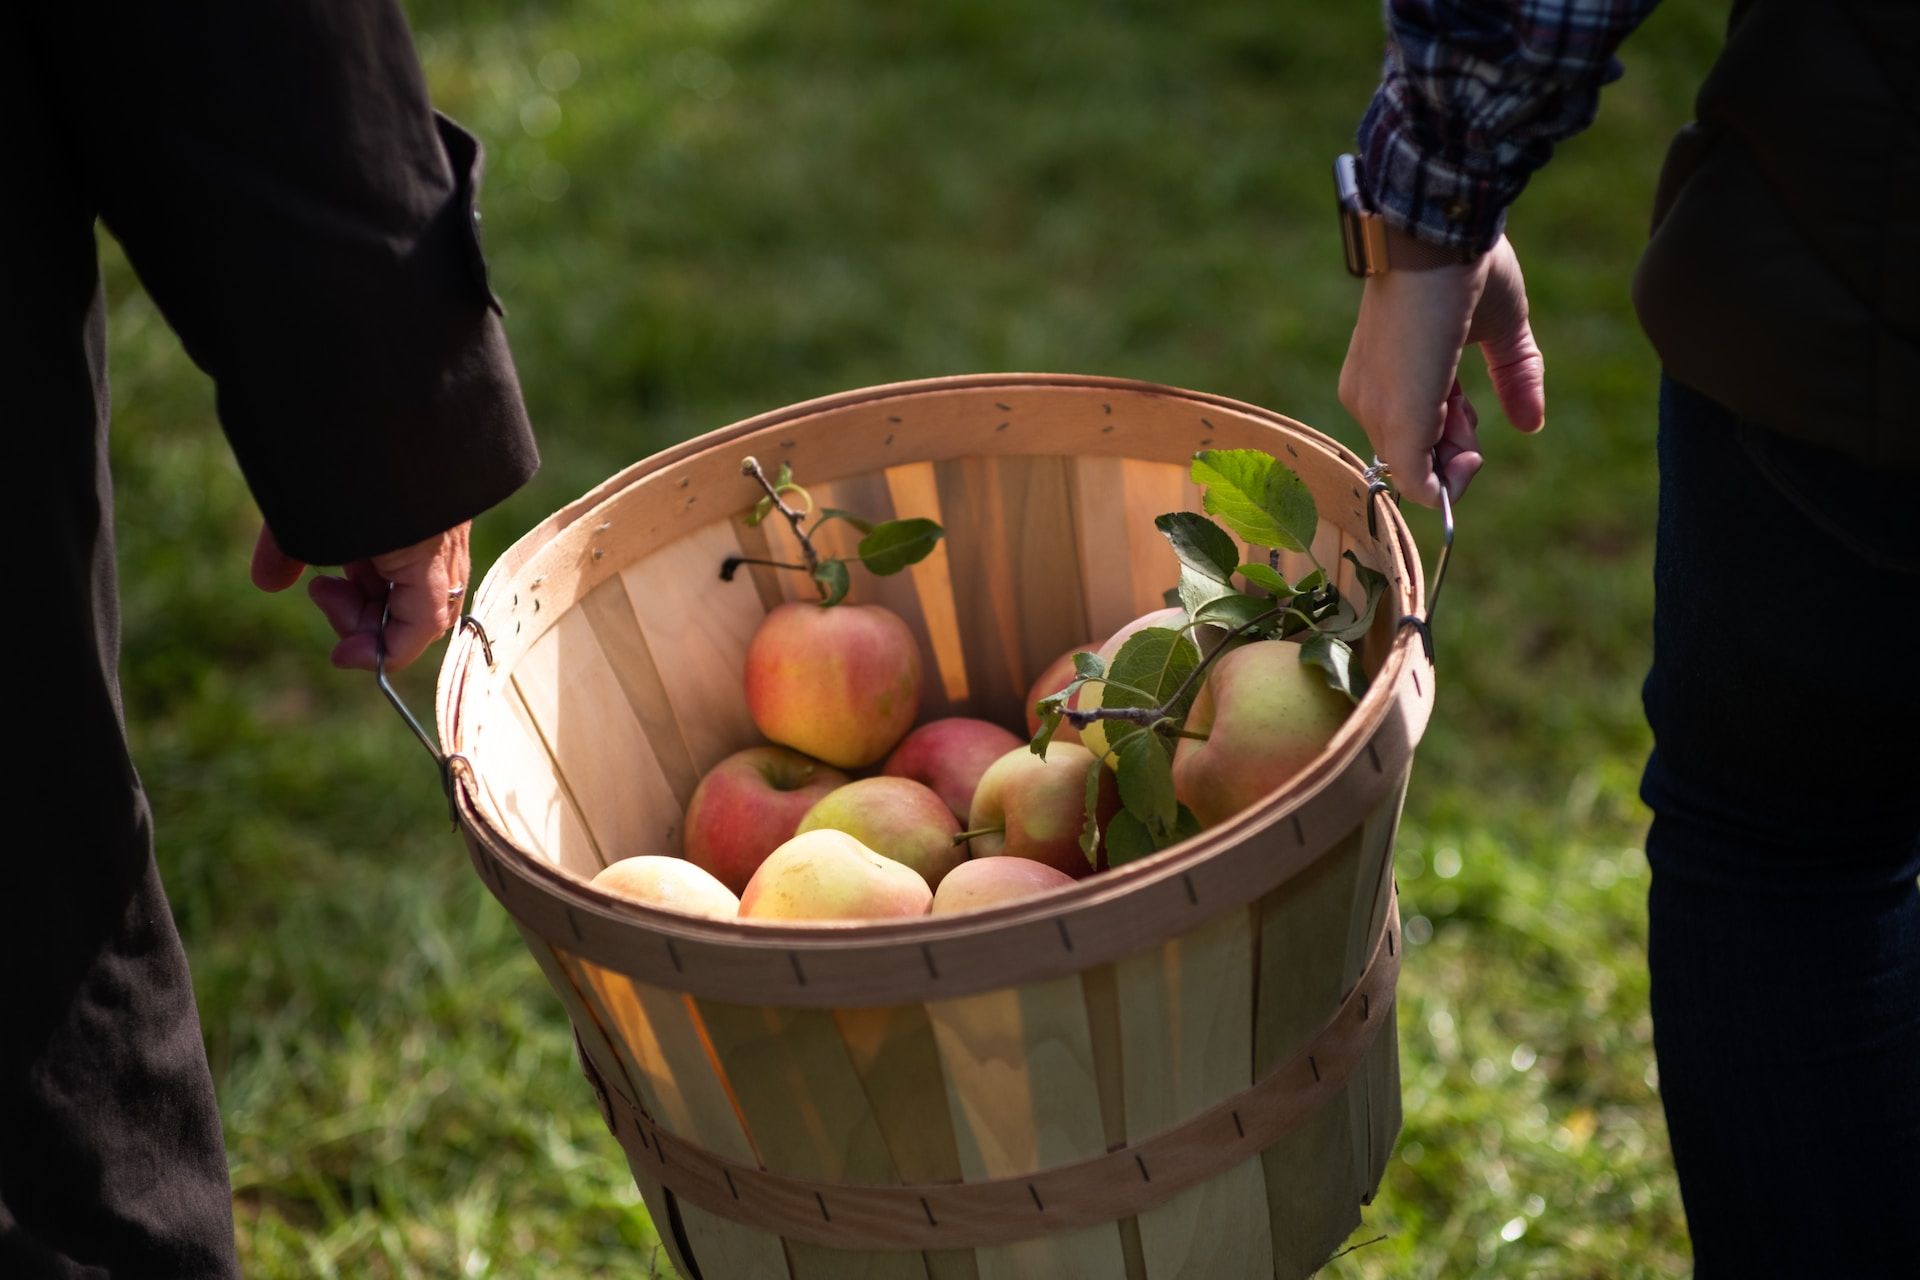 Apple picking couple enjoying a barrel of fresh apples